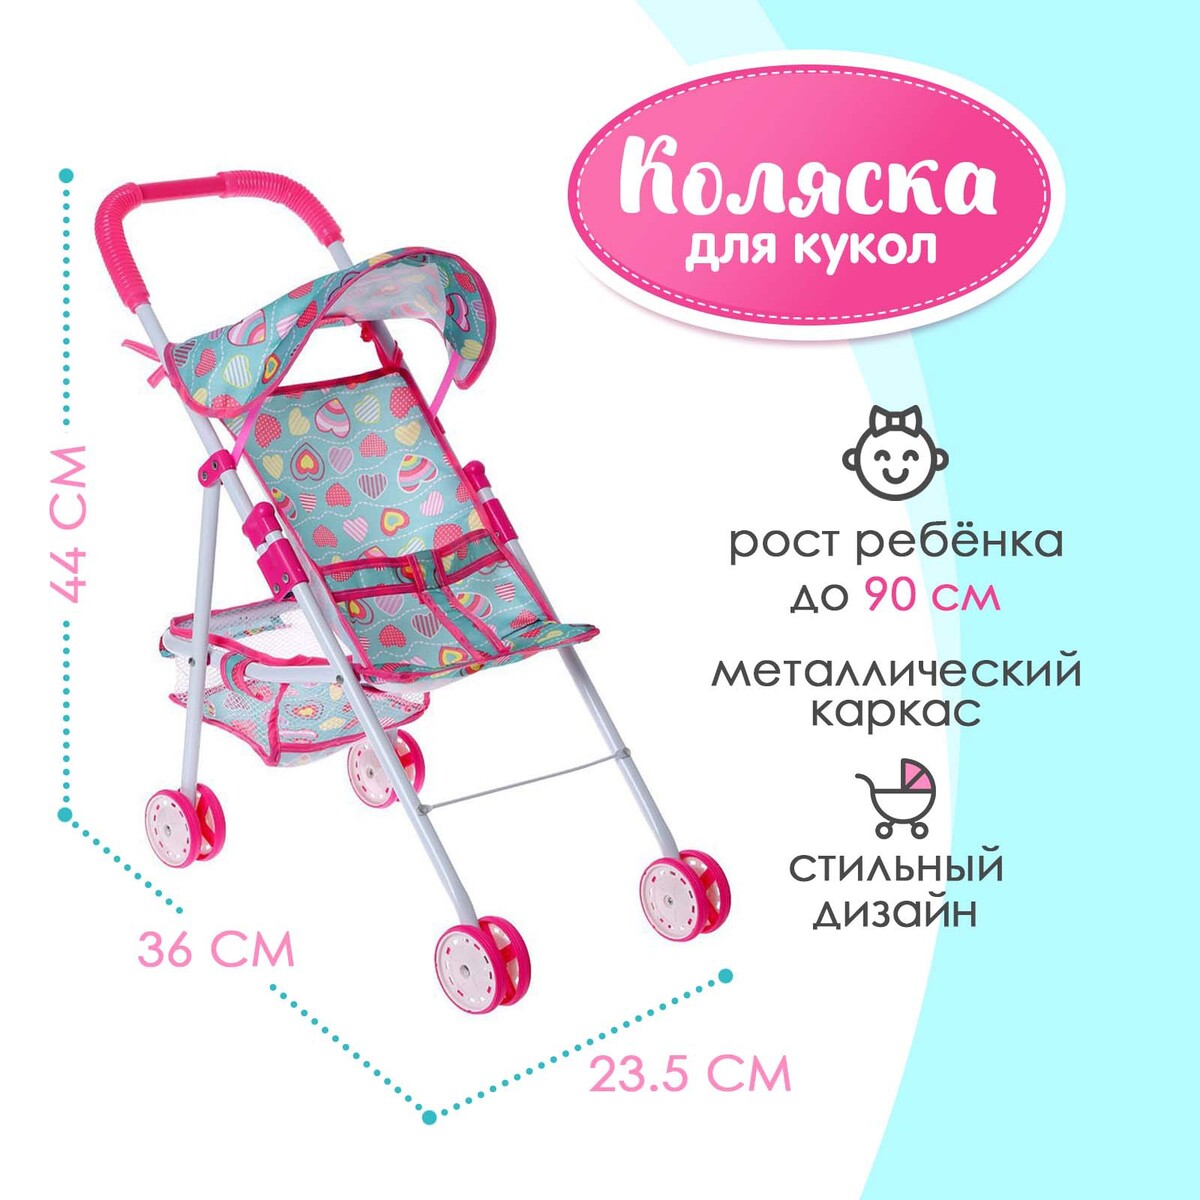 Коляска для кукол, летняя, металлический каркас коляска универсальная для кукол soni kids металлический каркас корзина сумка 72х64х35